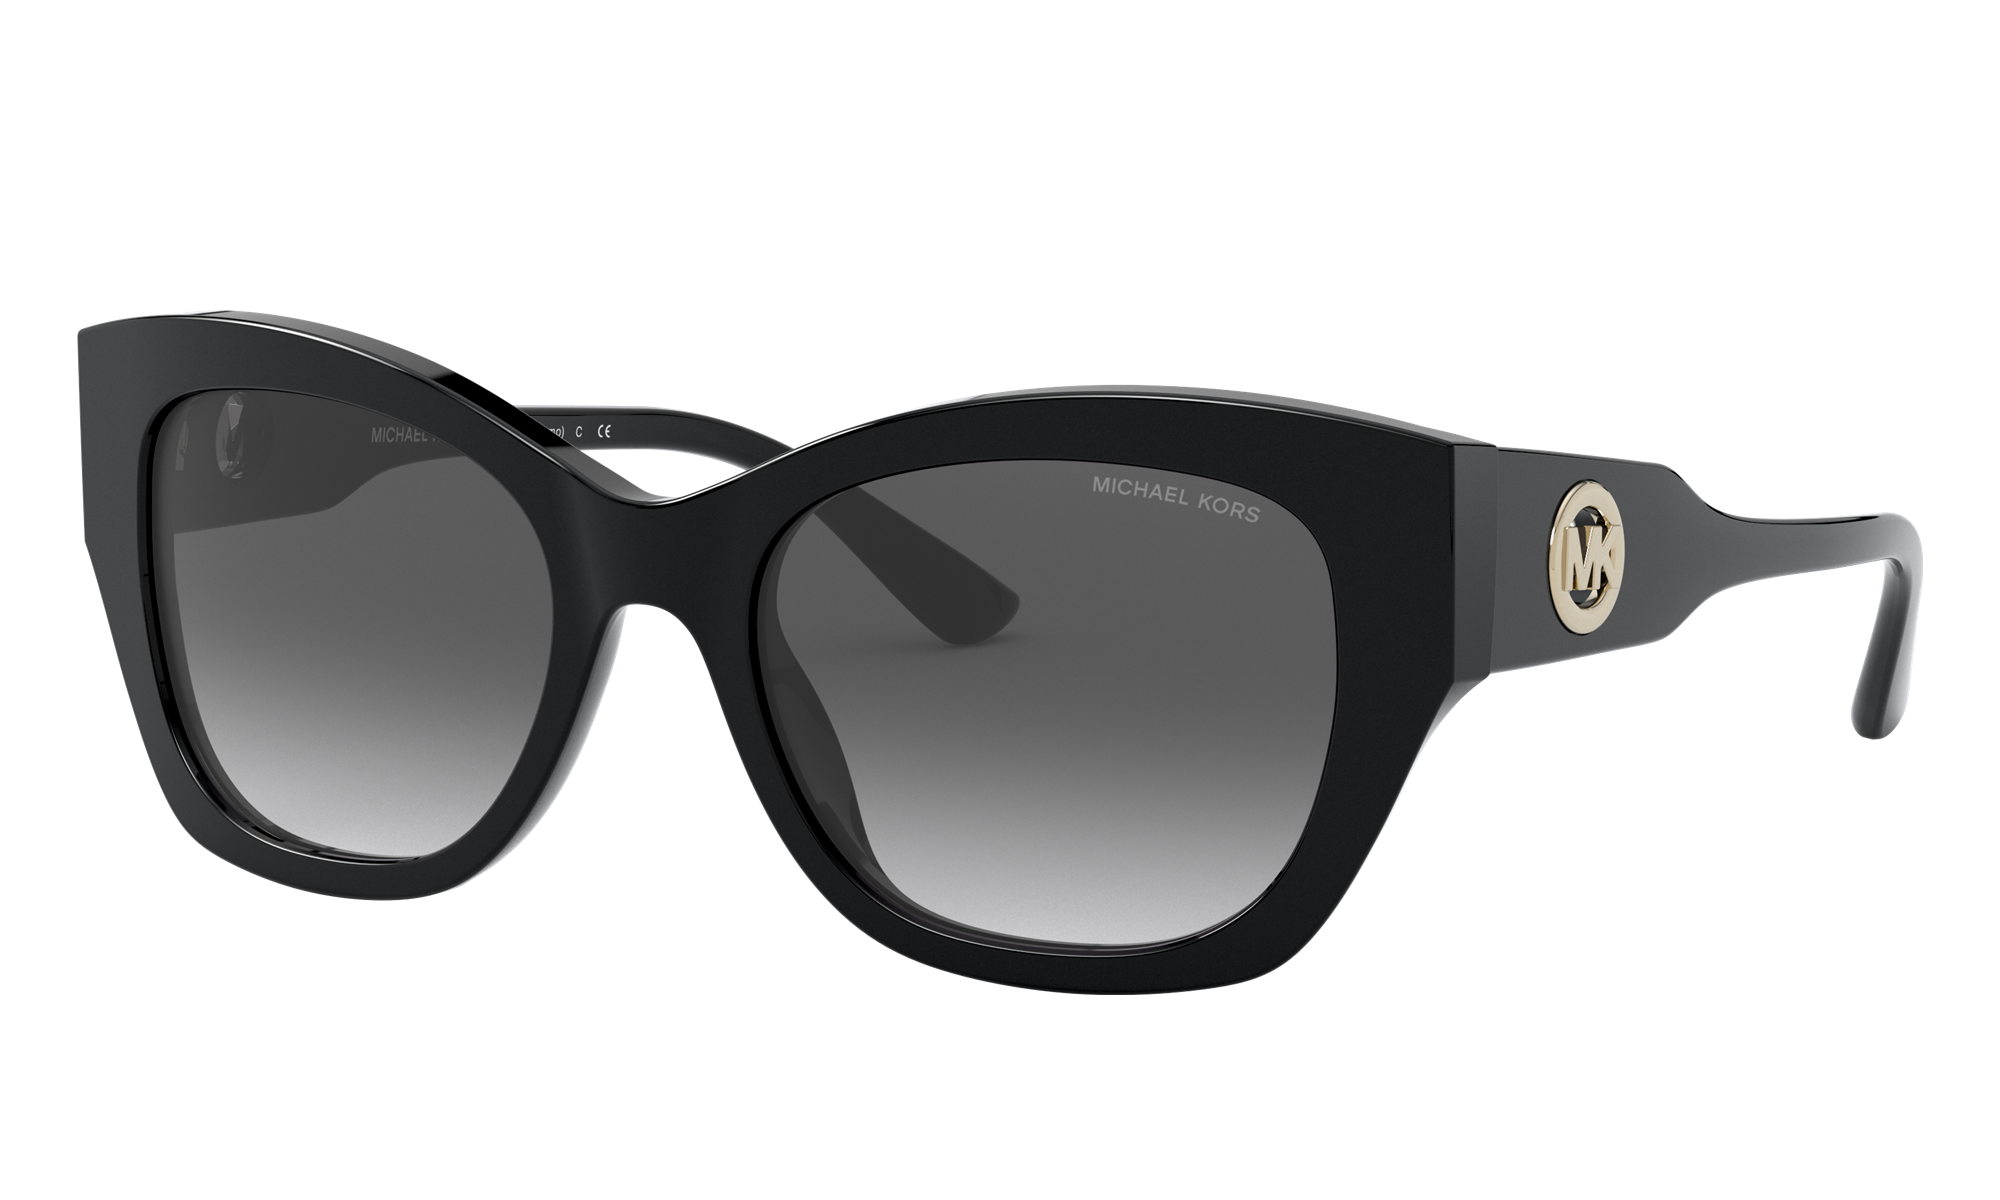 Michael Kors Byron Gunmetal Mirrored Rectangular Mens Sunglasses MK2159  37056G 55 725125380614  Sunglasses  Jomashop